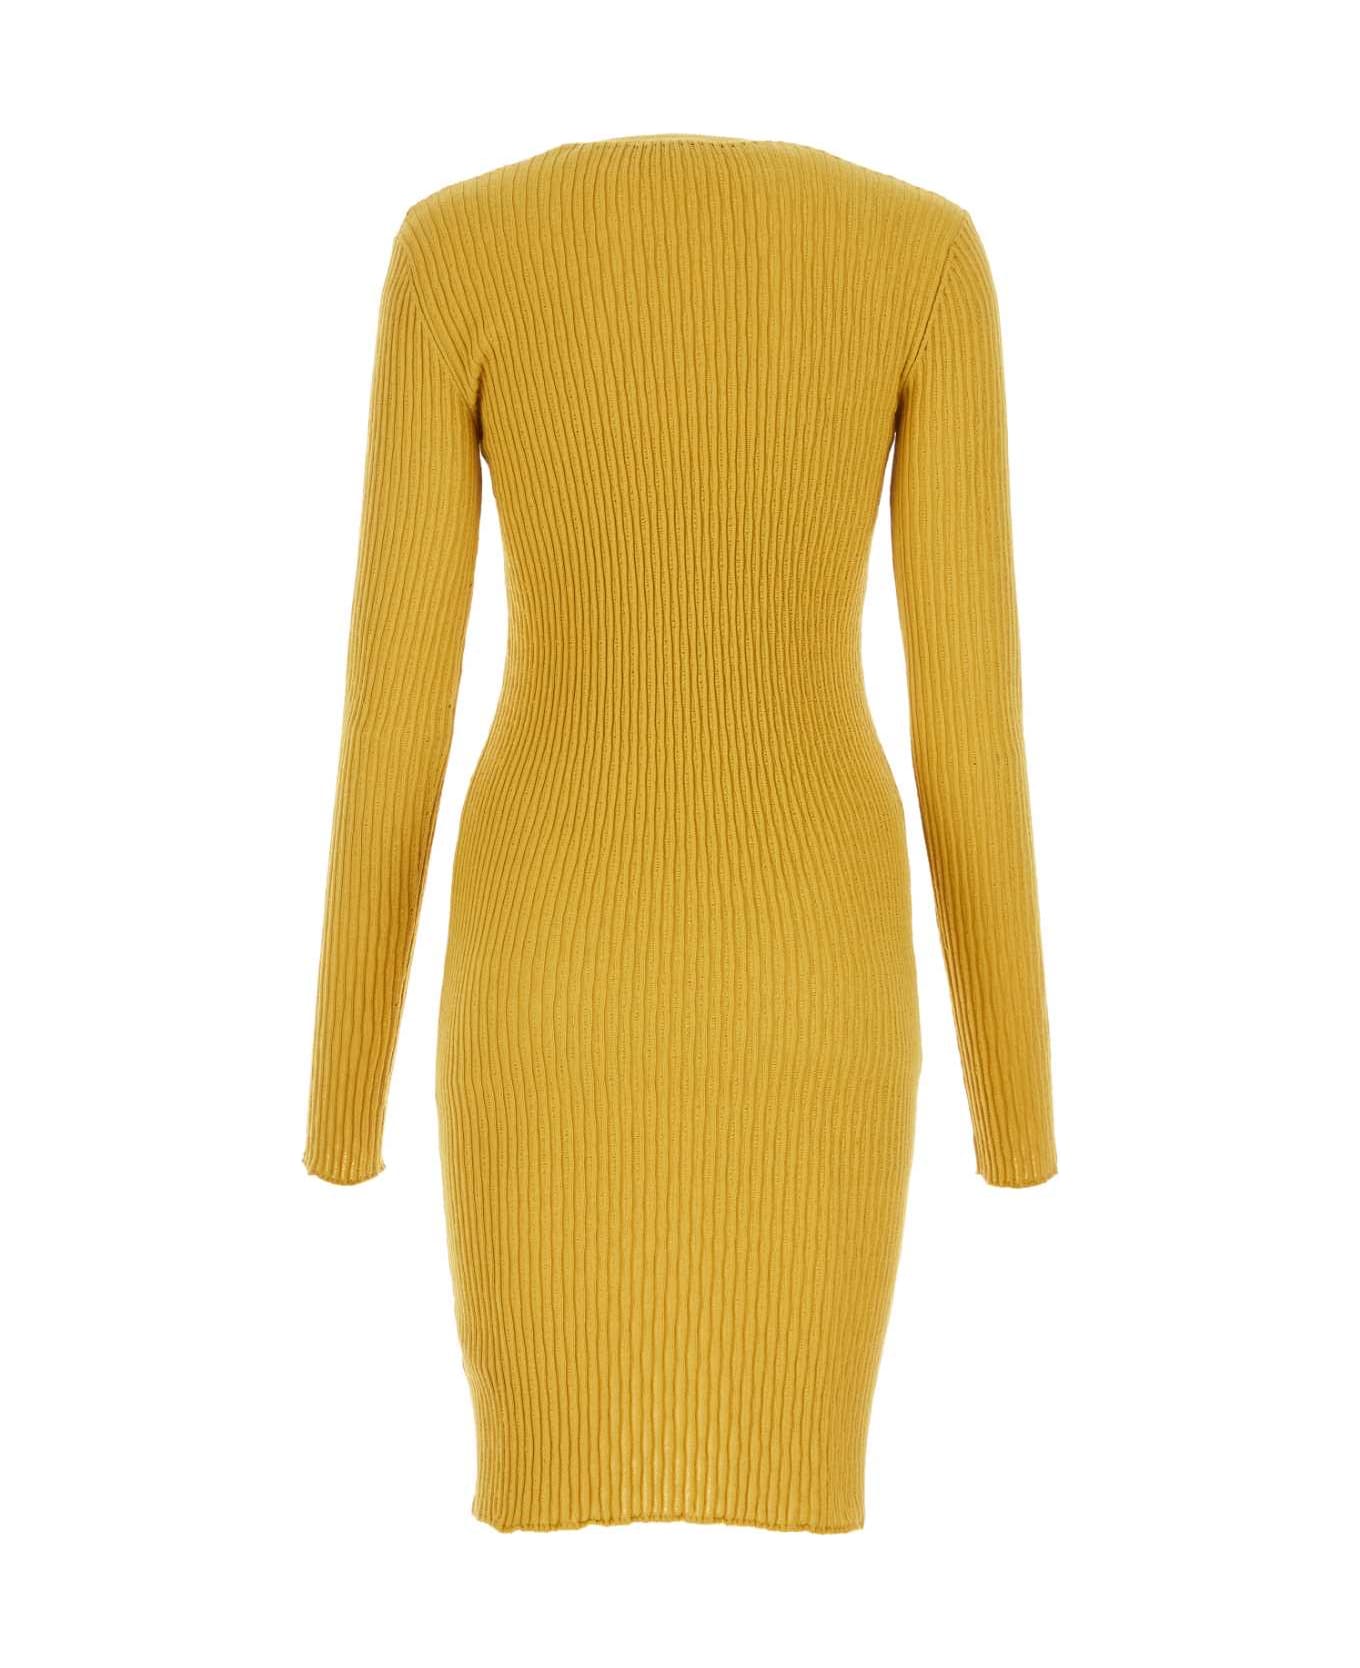 Burberry Mustard Stretch Wool Blend Dress - PEAR